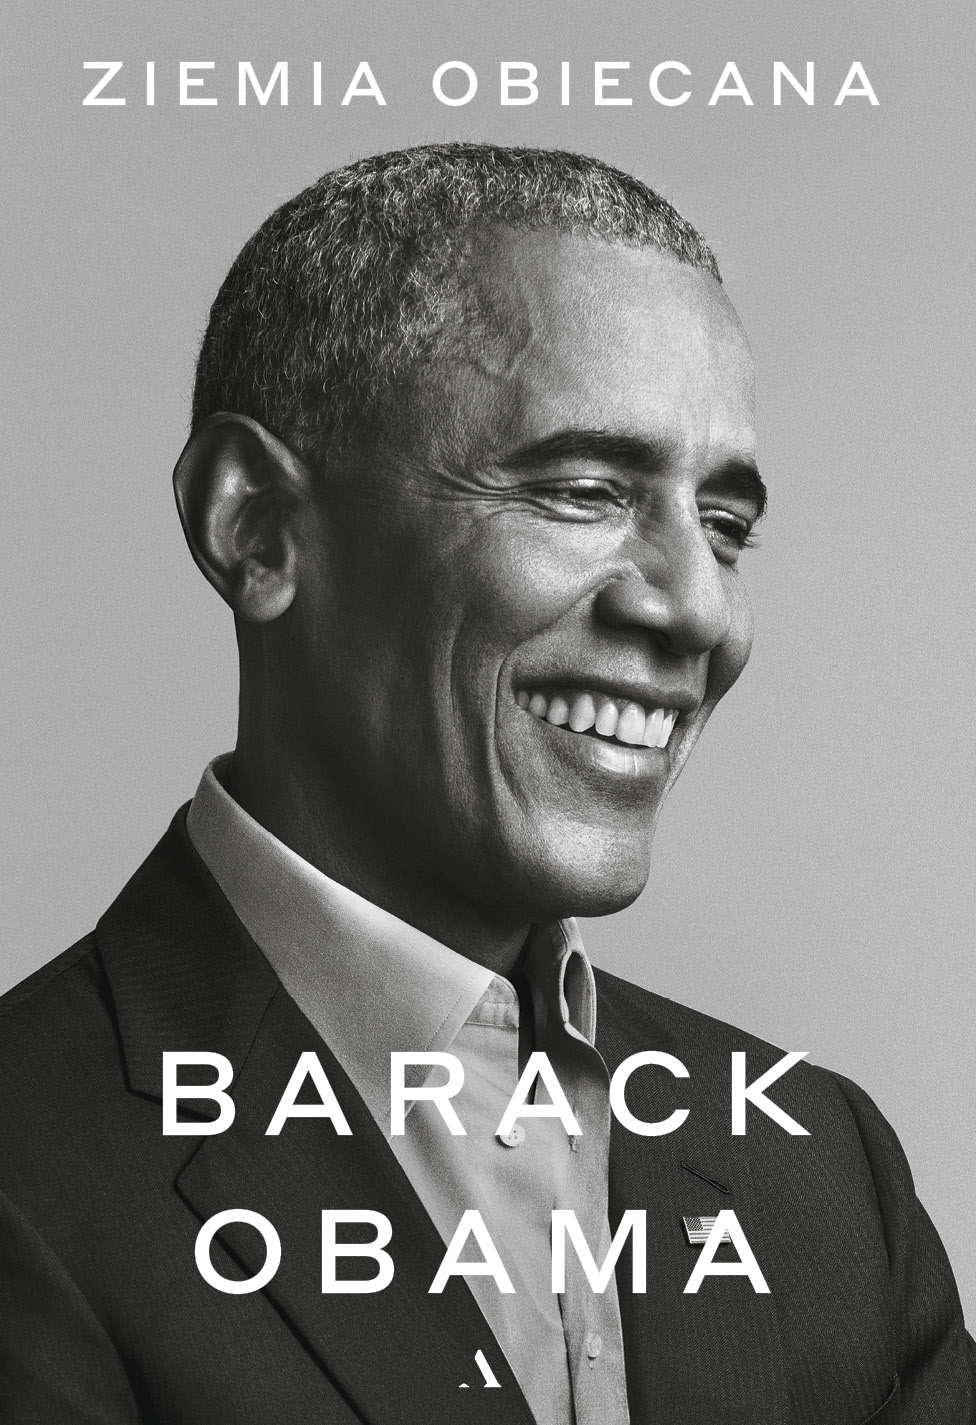 „Ziemia obiecana”. Autobiografia Baracka Obamy